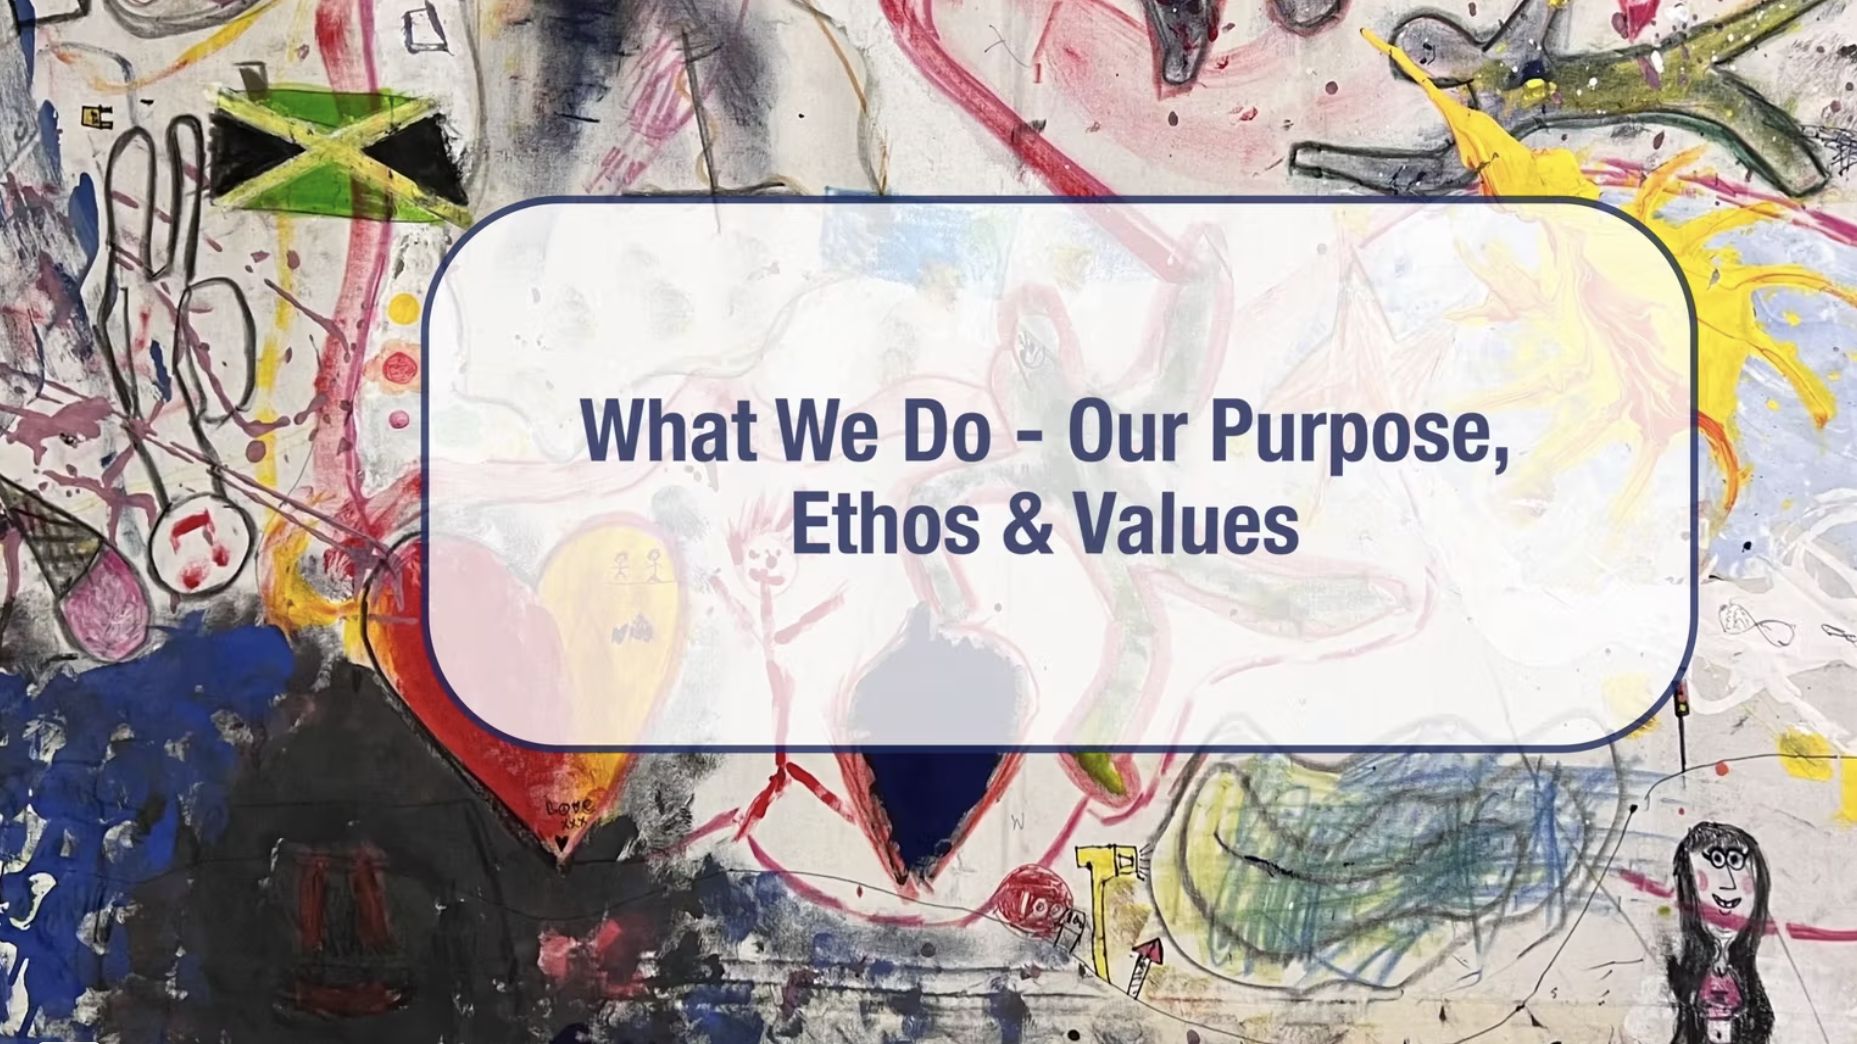 Our Purpose, Ethos & Values